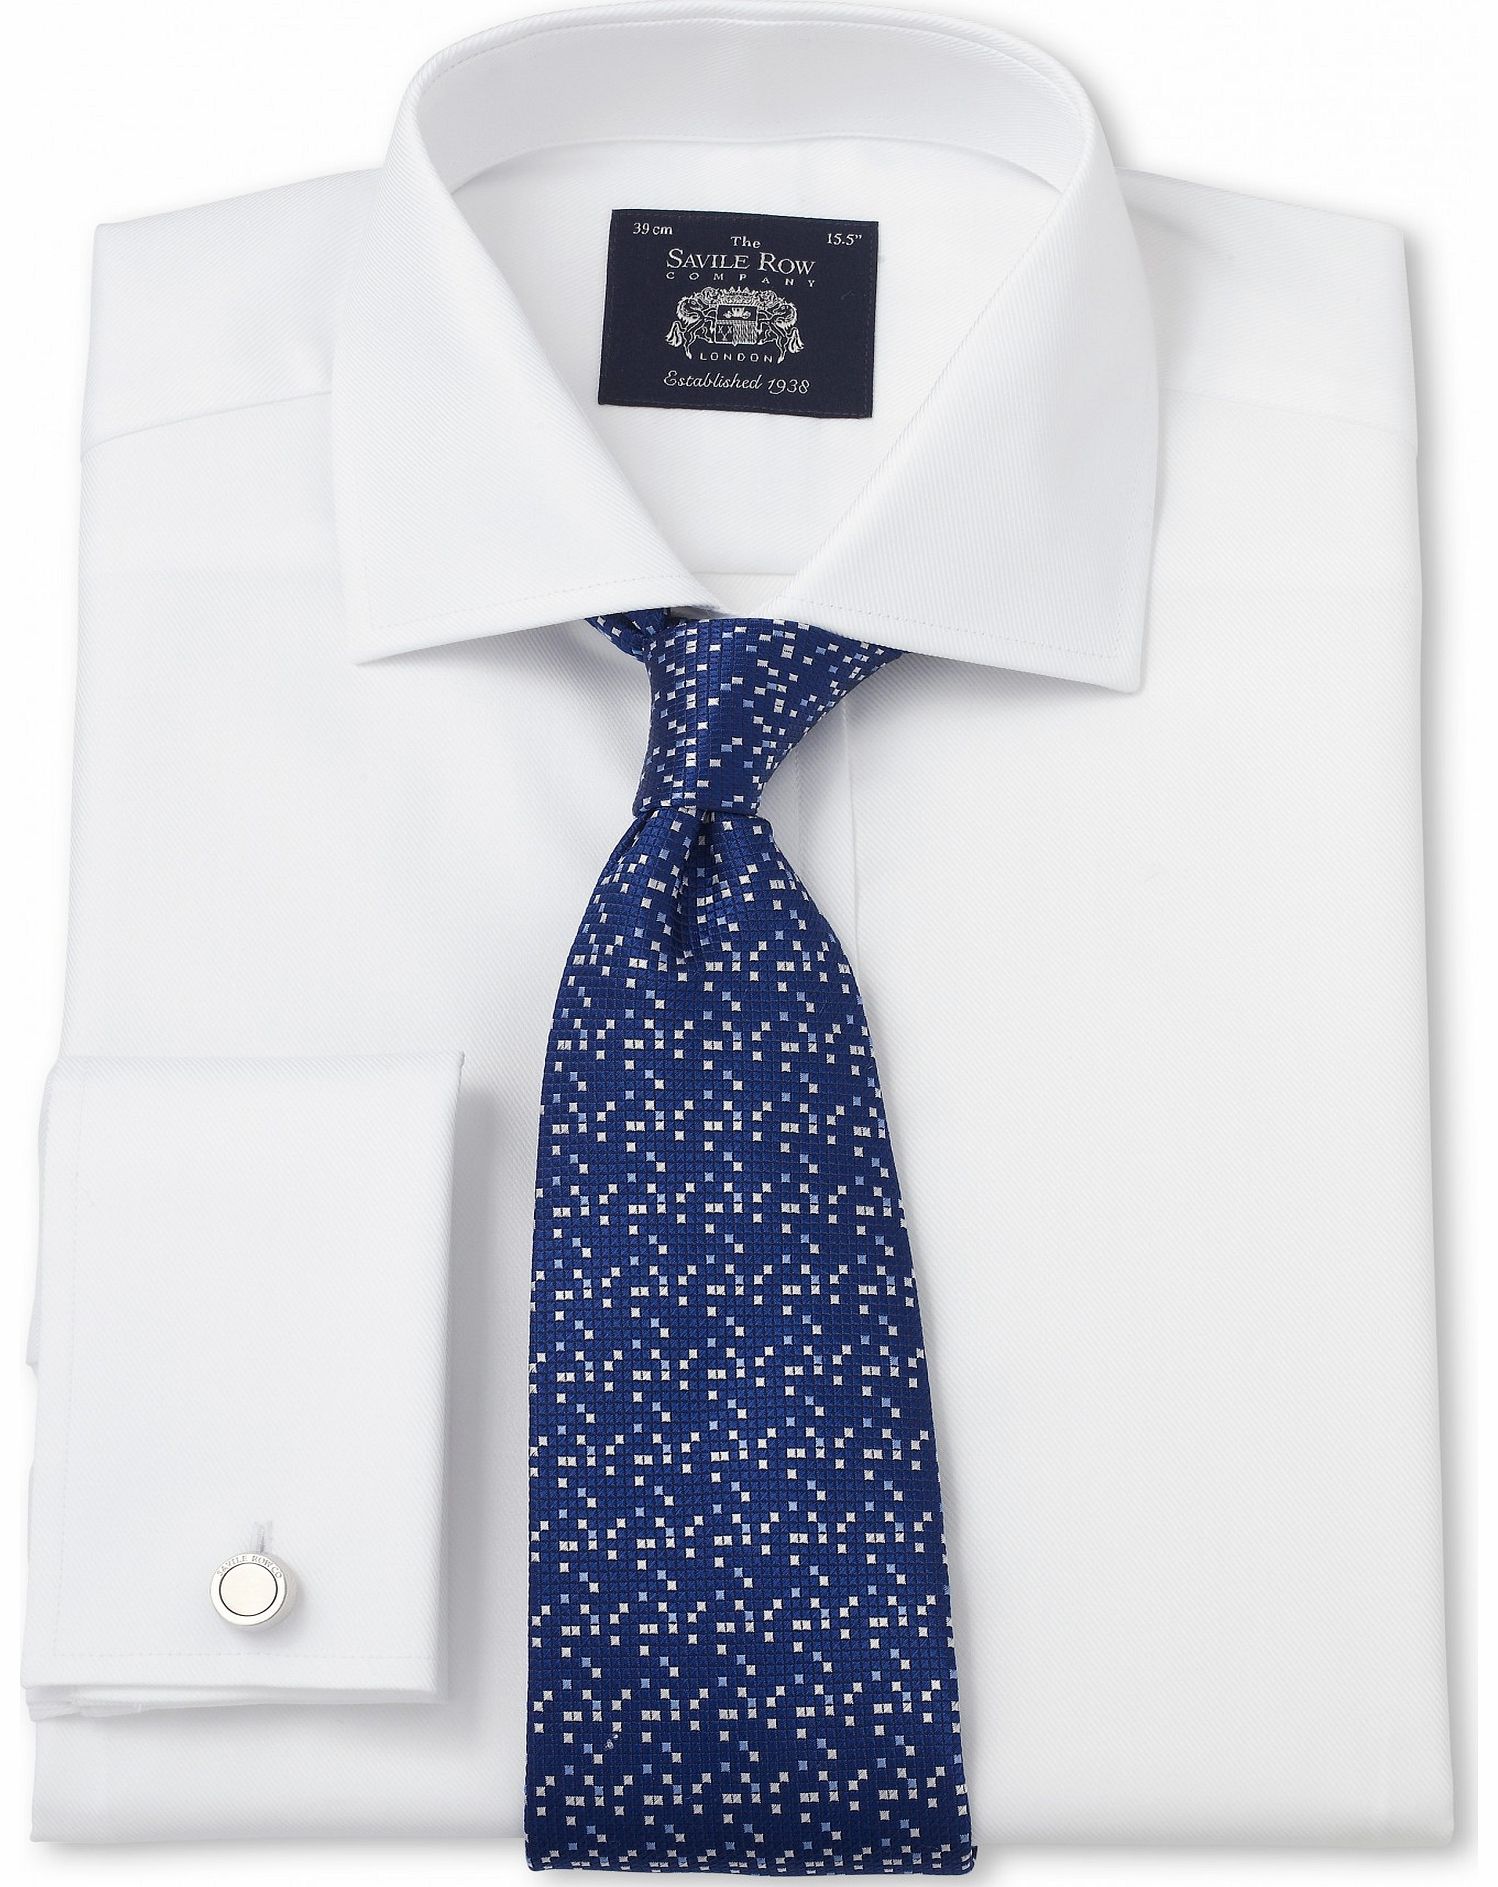 Savile Row Company White Twill Slim Fit Shirt 17`` Lengthened Double